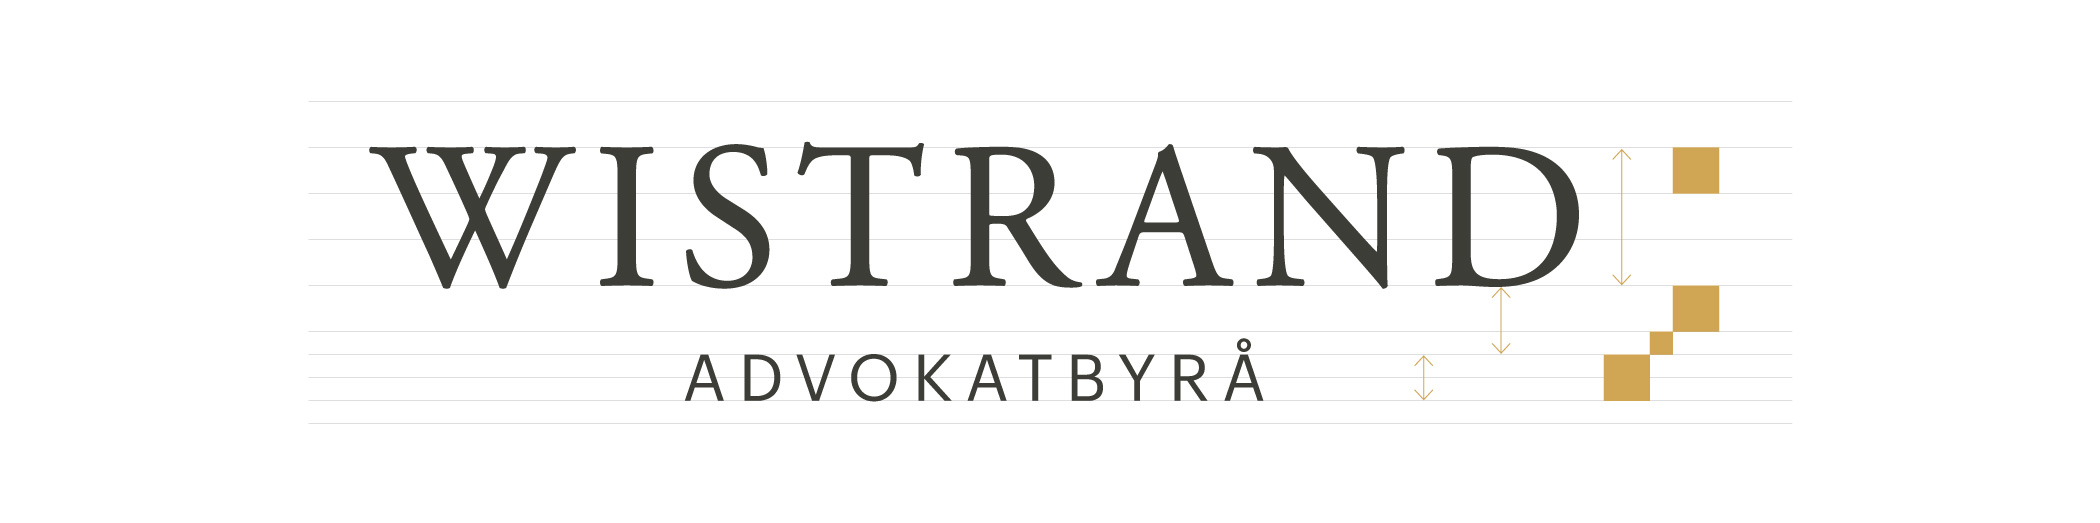 Wistrand logo construction